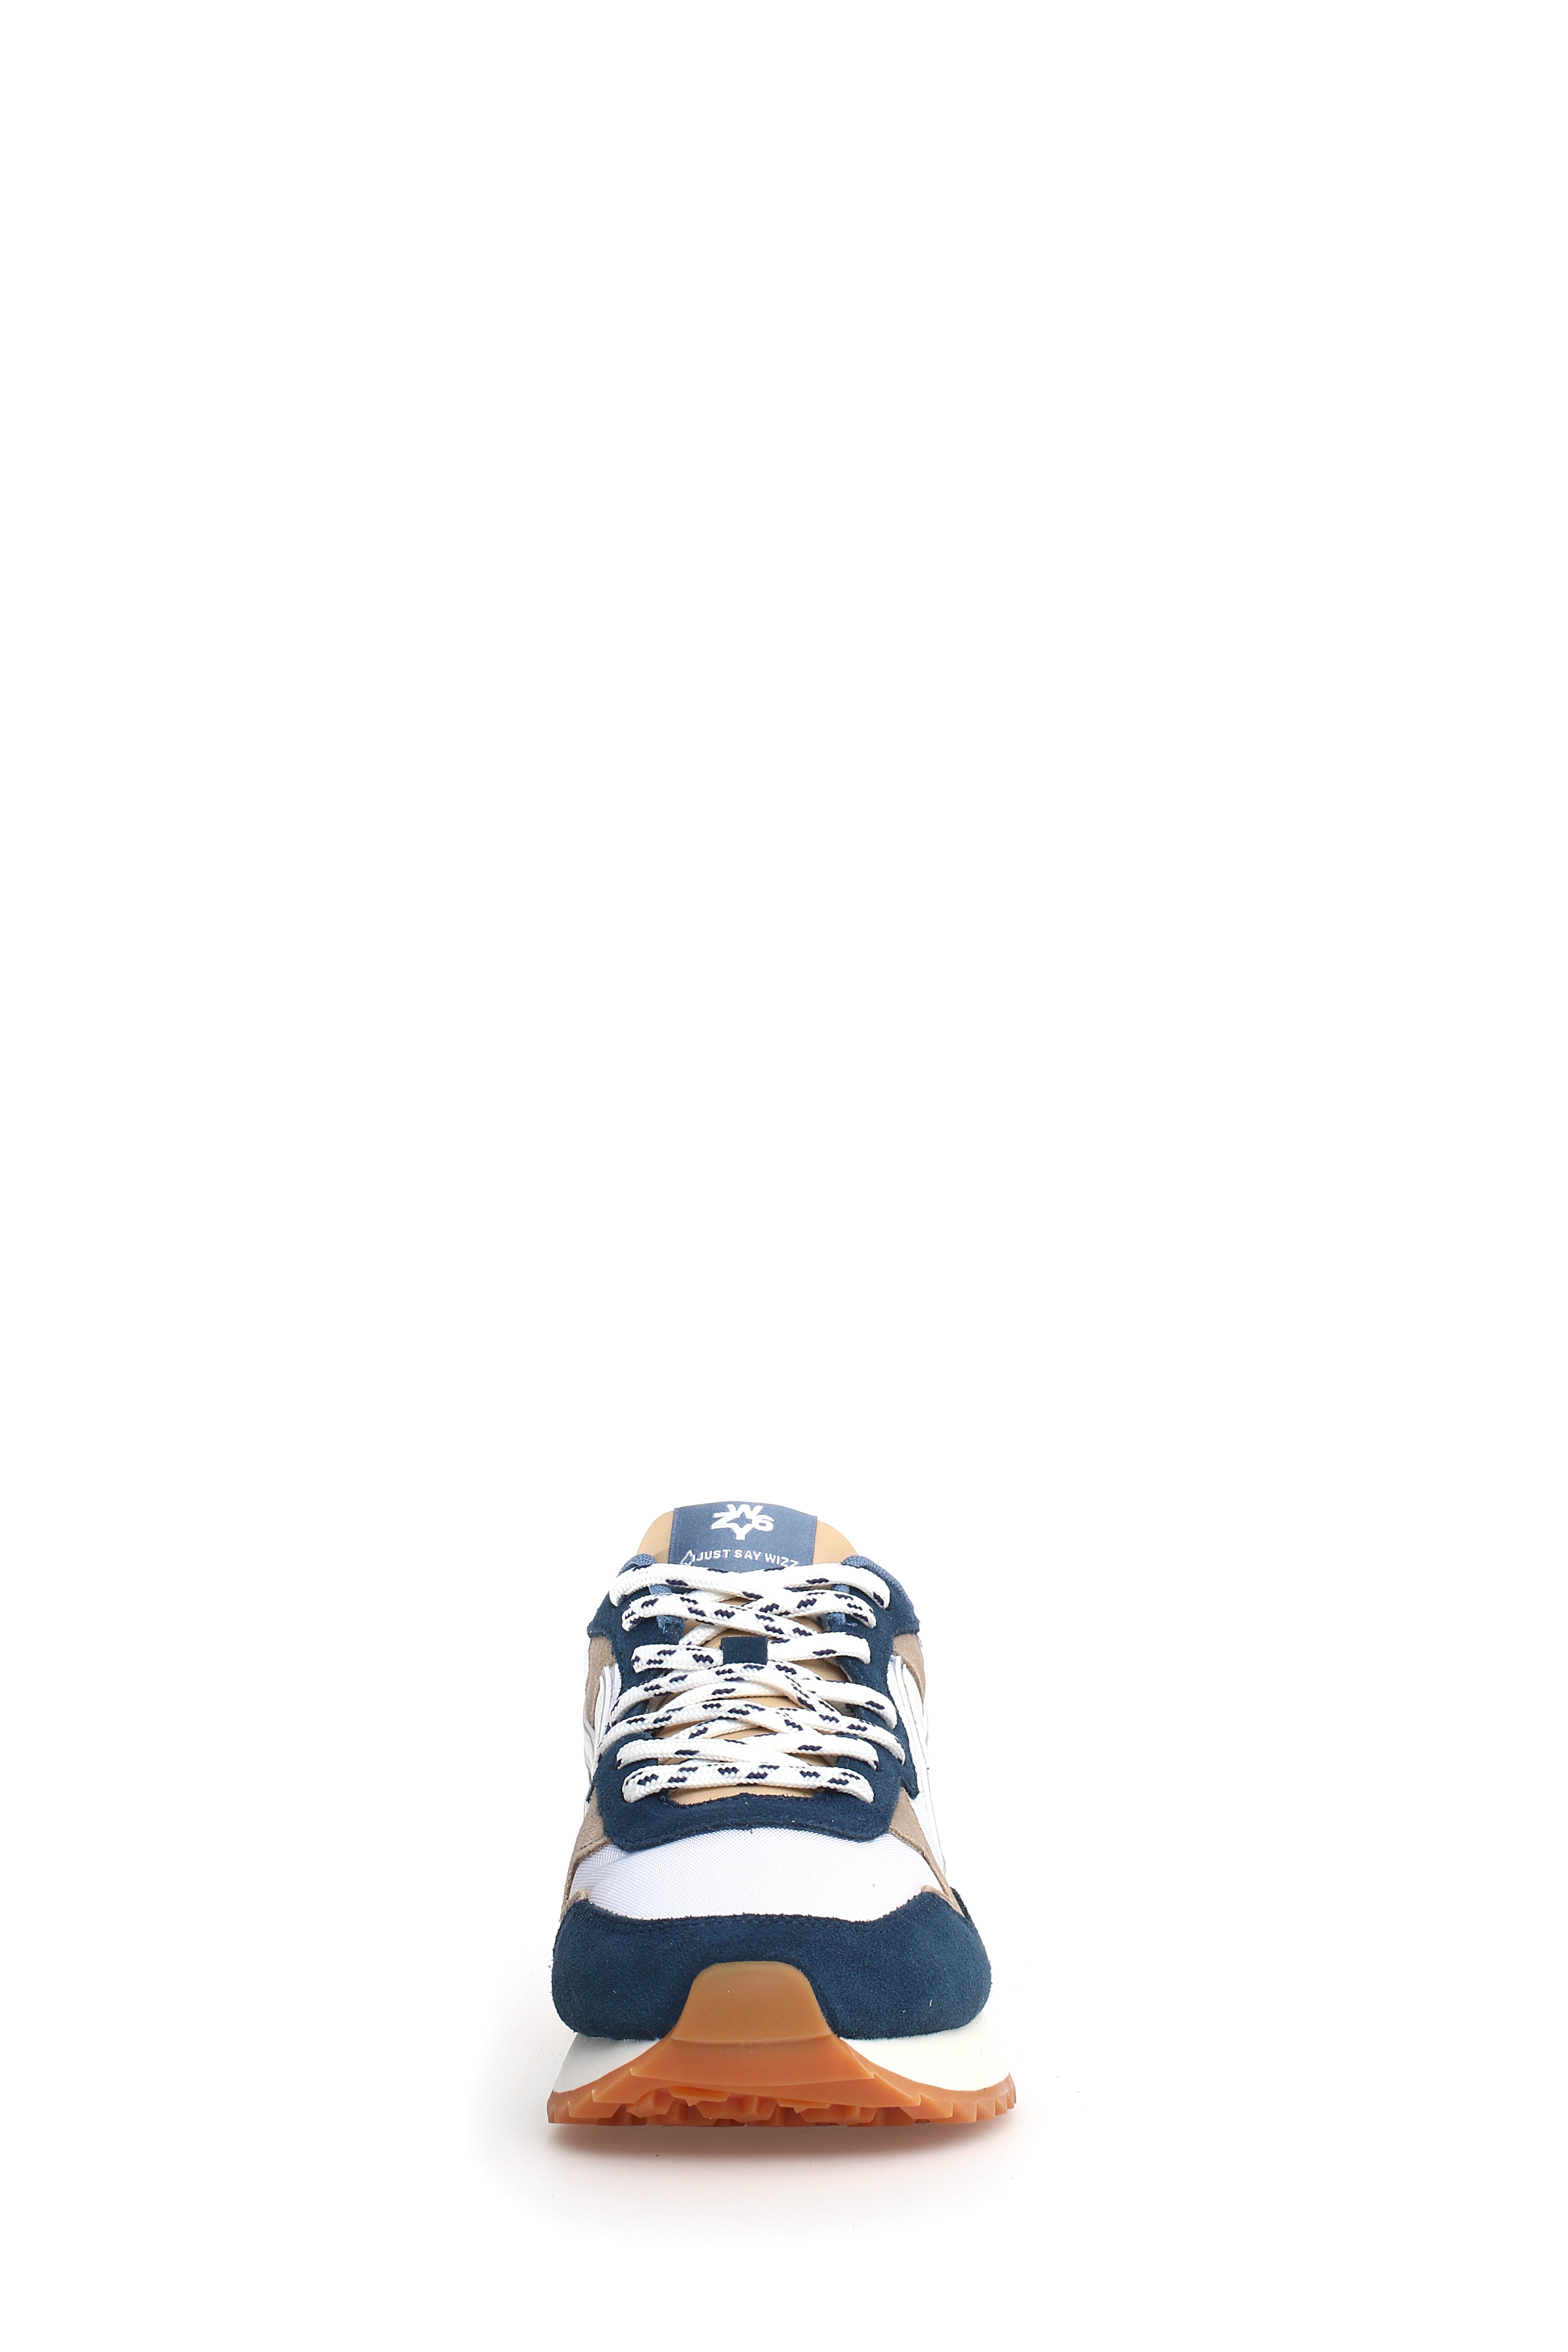 W6YZ-Sneaker Uomo Yak M-Bluette White Taupe